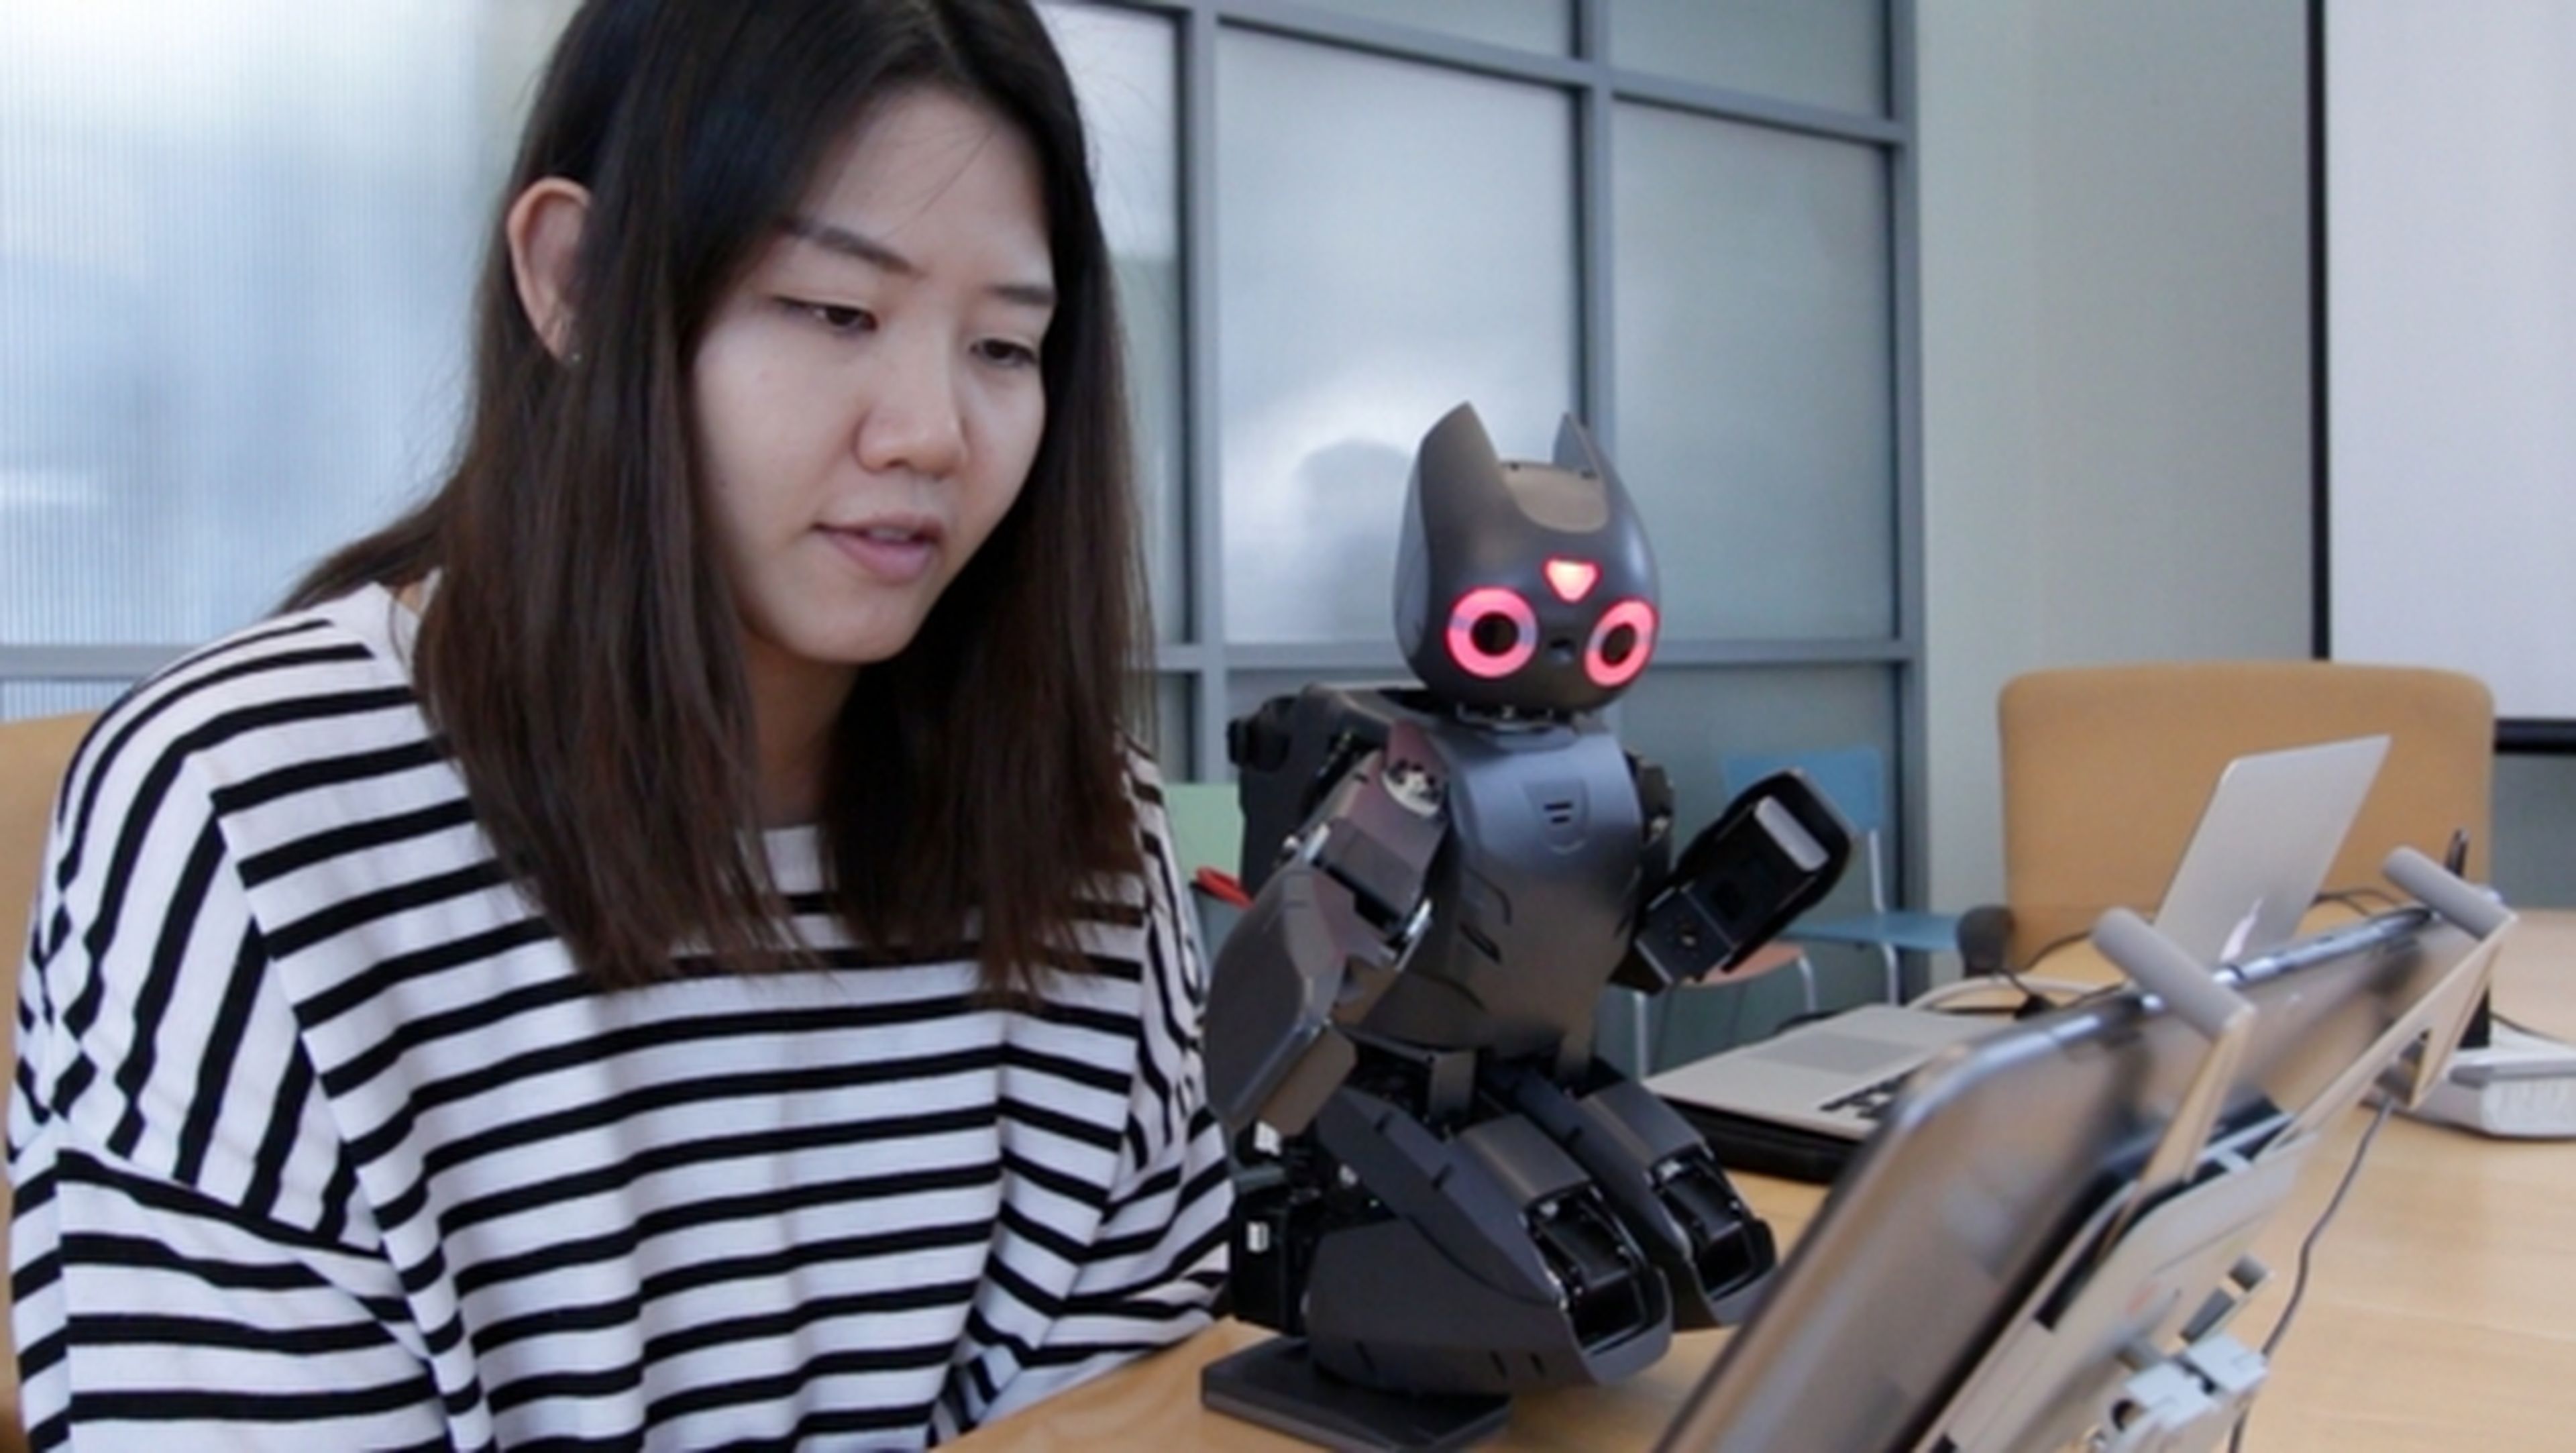 Un robot que juega a Angry Birds ayudará en la rehabilitación de niños discapacitados o lesionados.